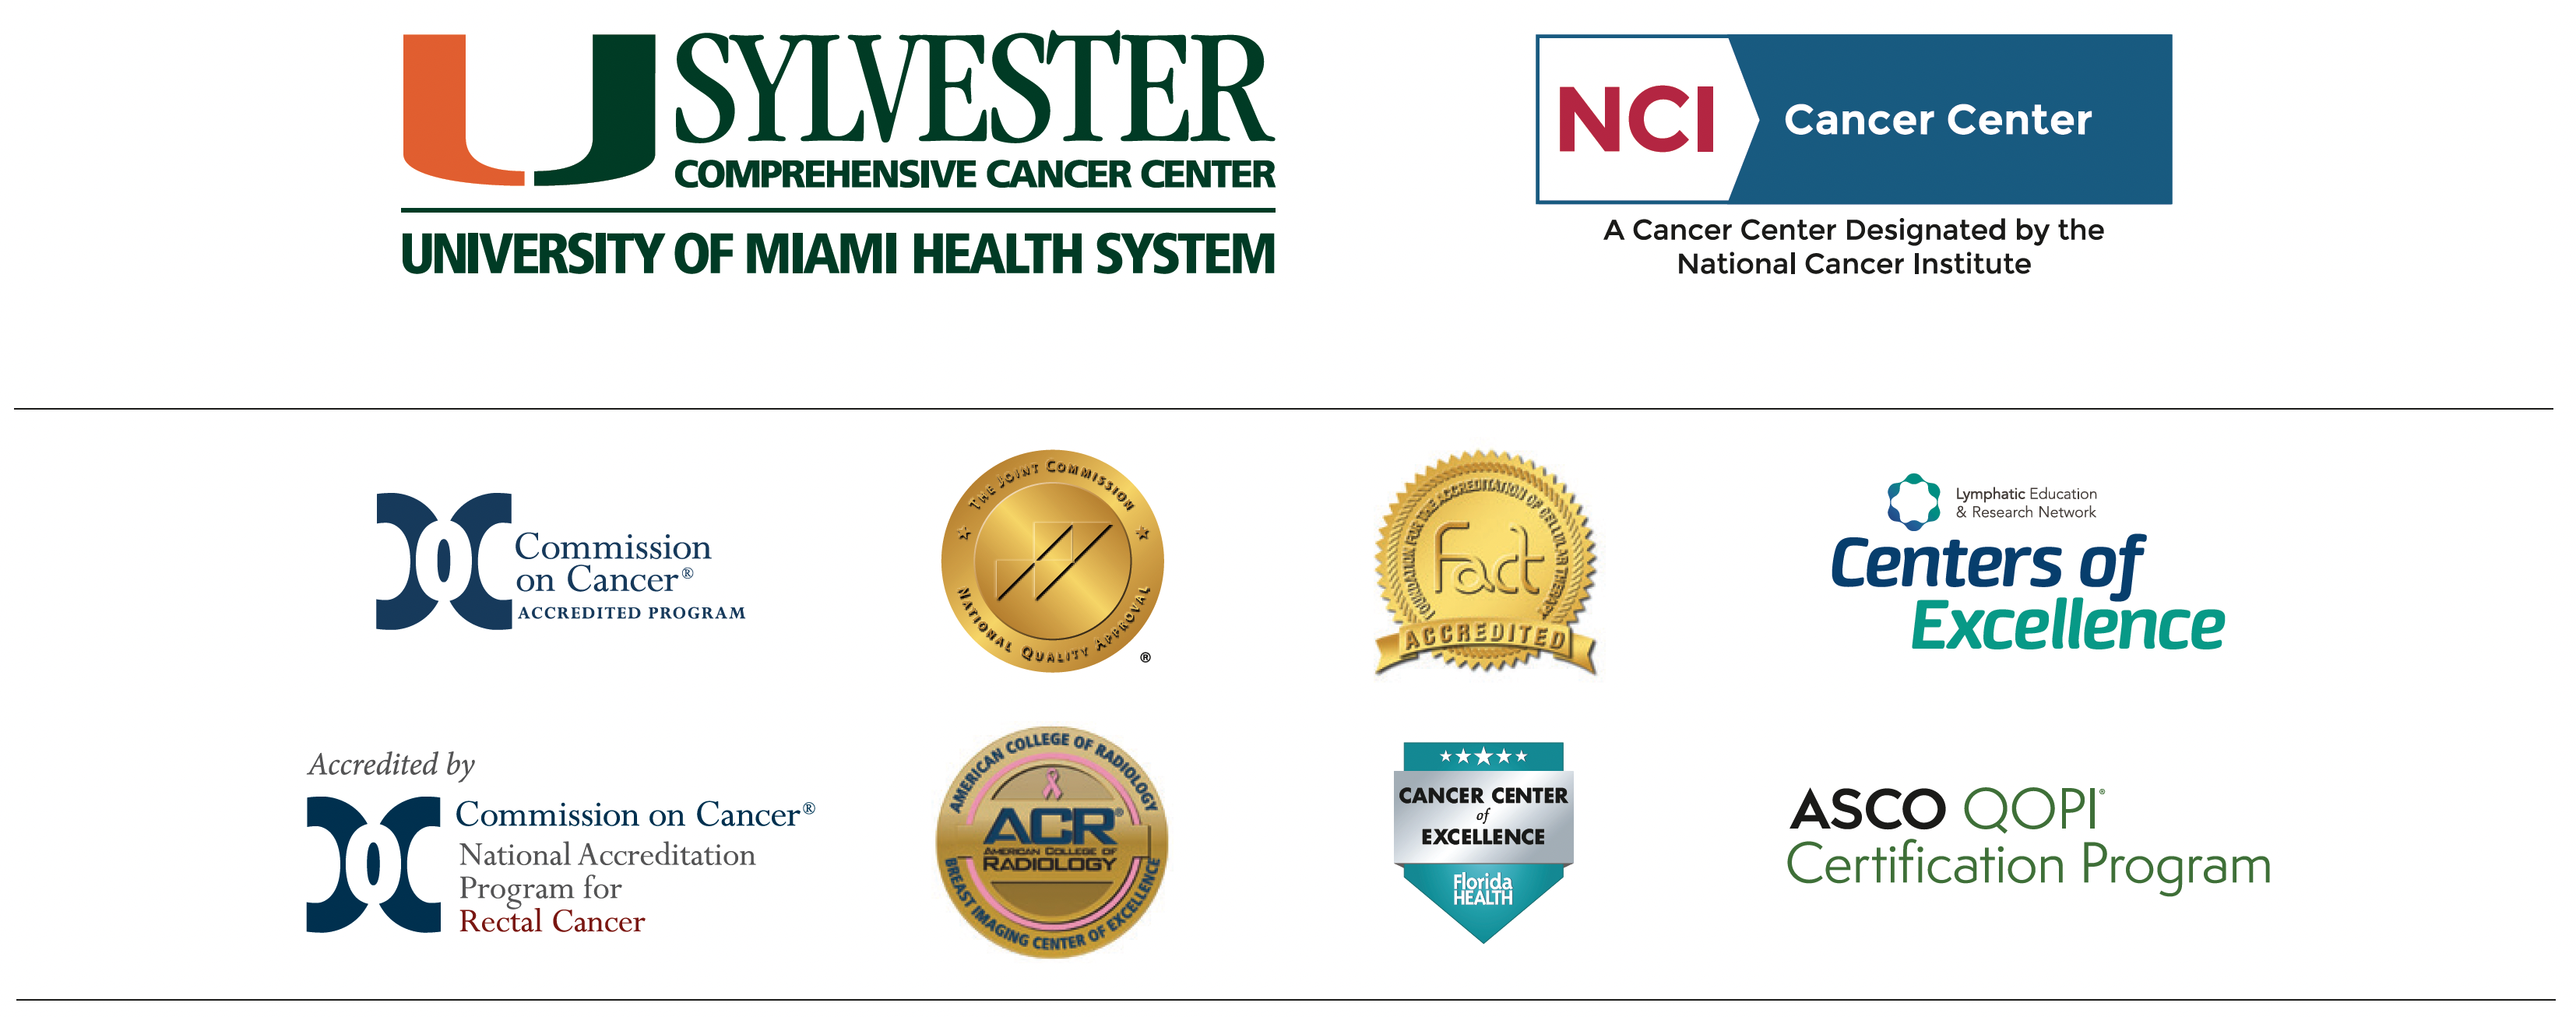 Sylvester Comprehensive Cancer Center logo, NCI Cancer Center logo and other accreditations and designations